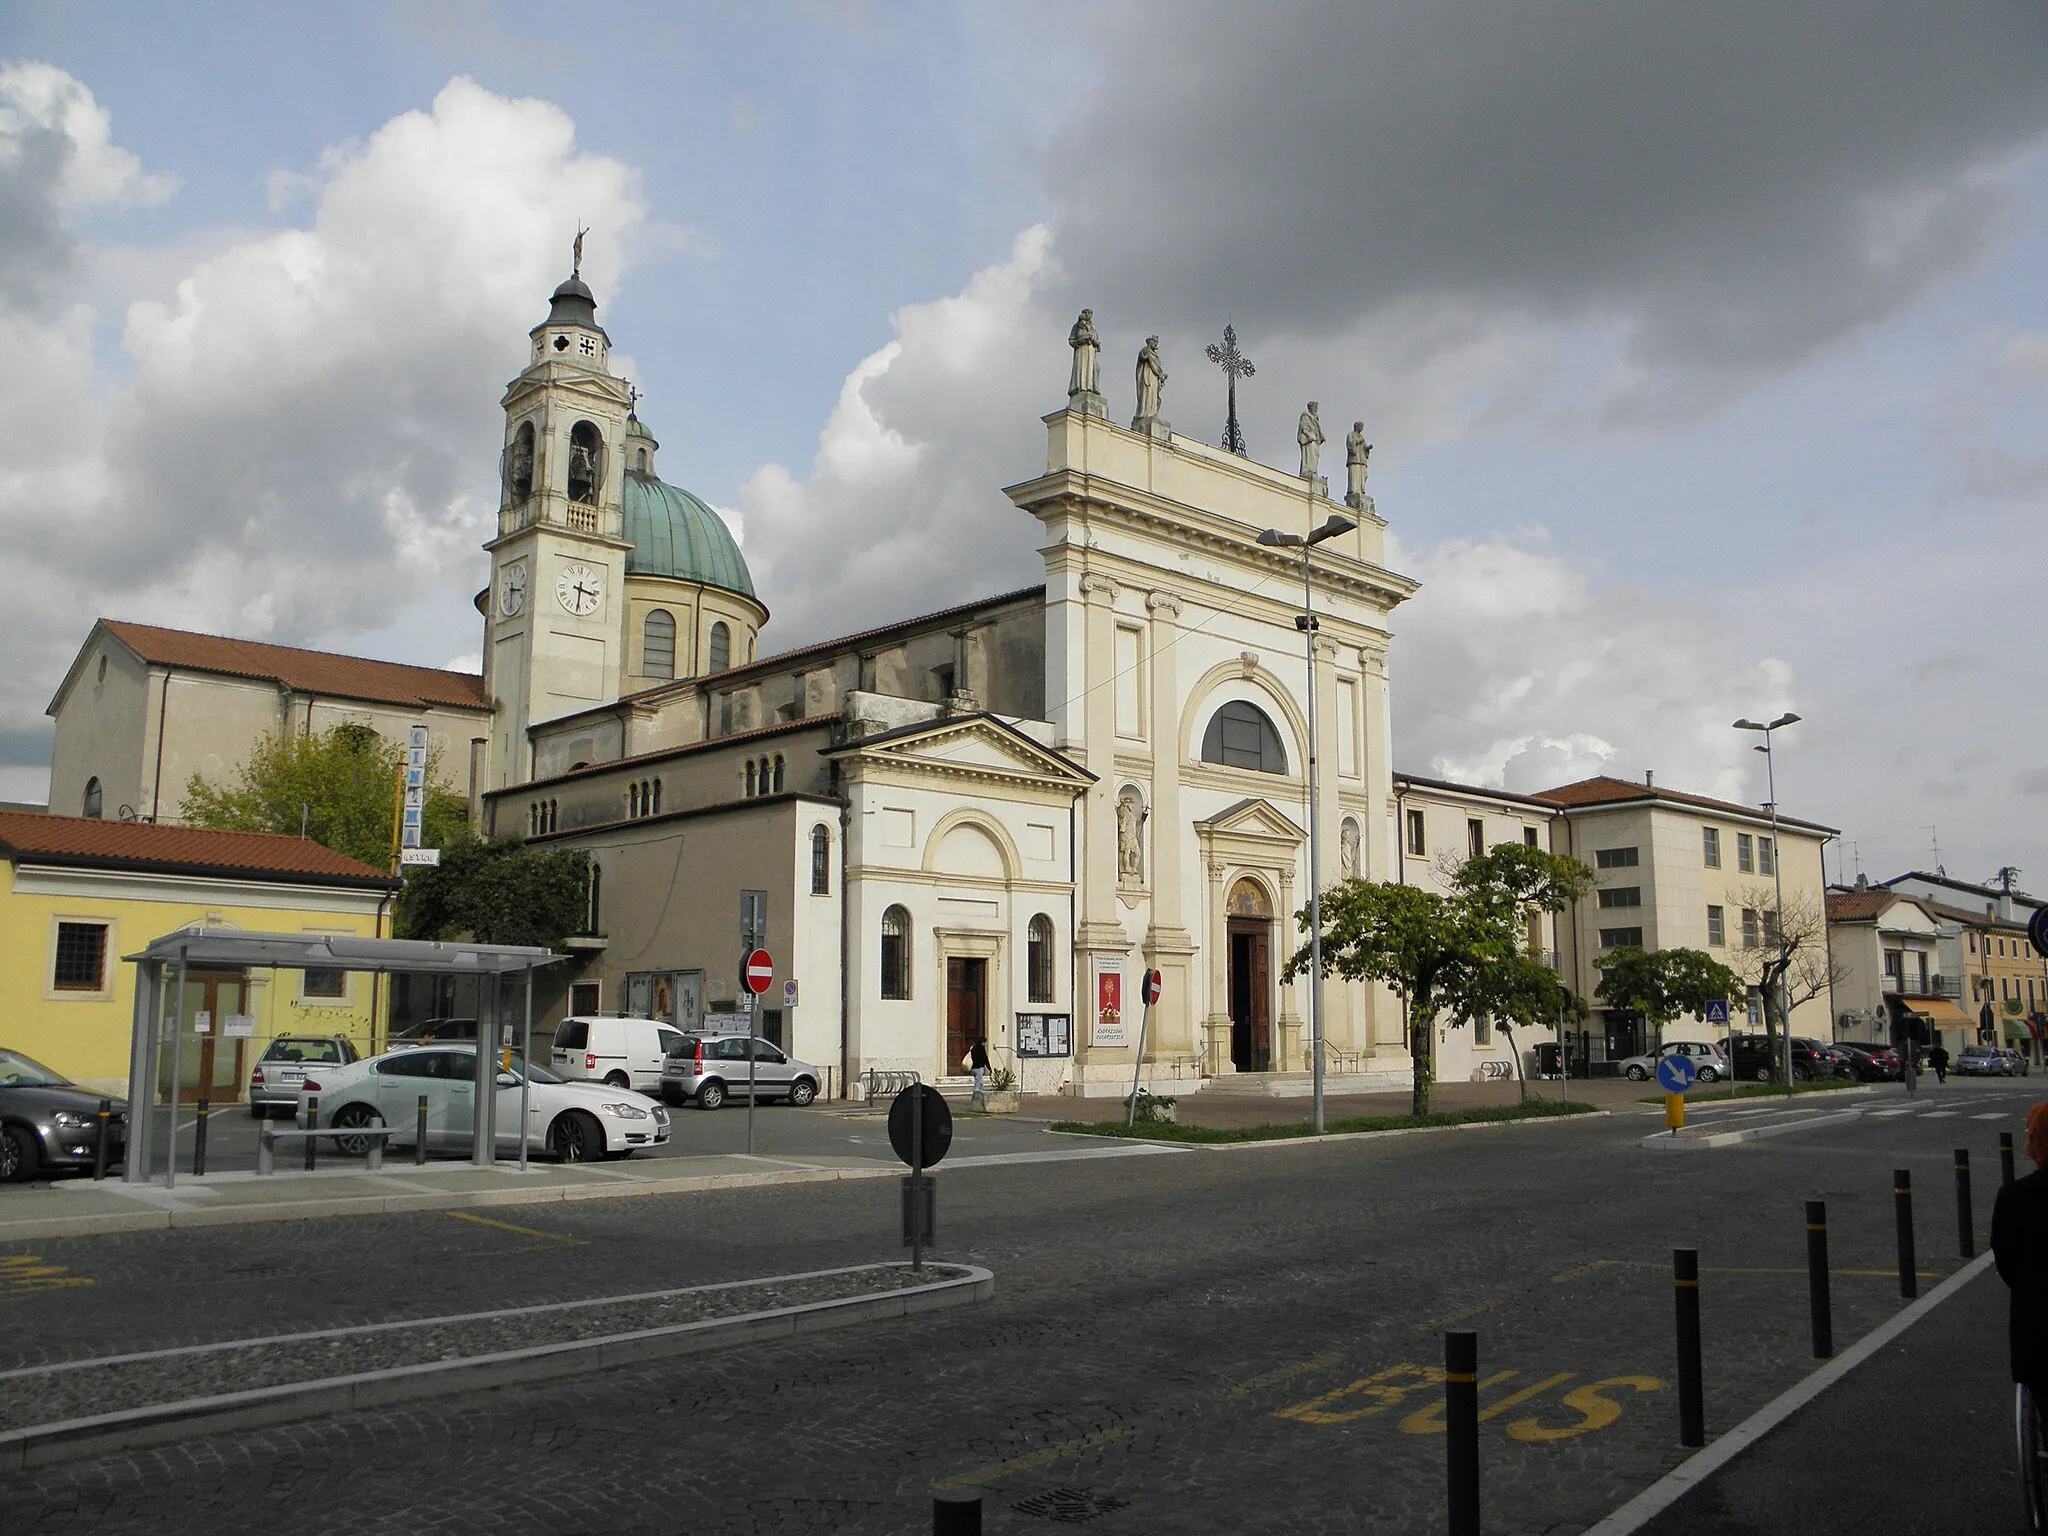 Image of San Giovanni Lupatoto